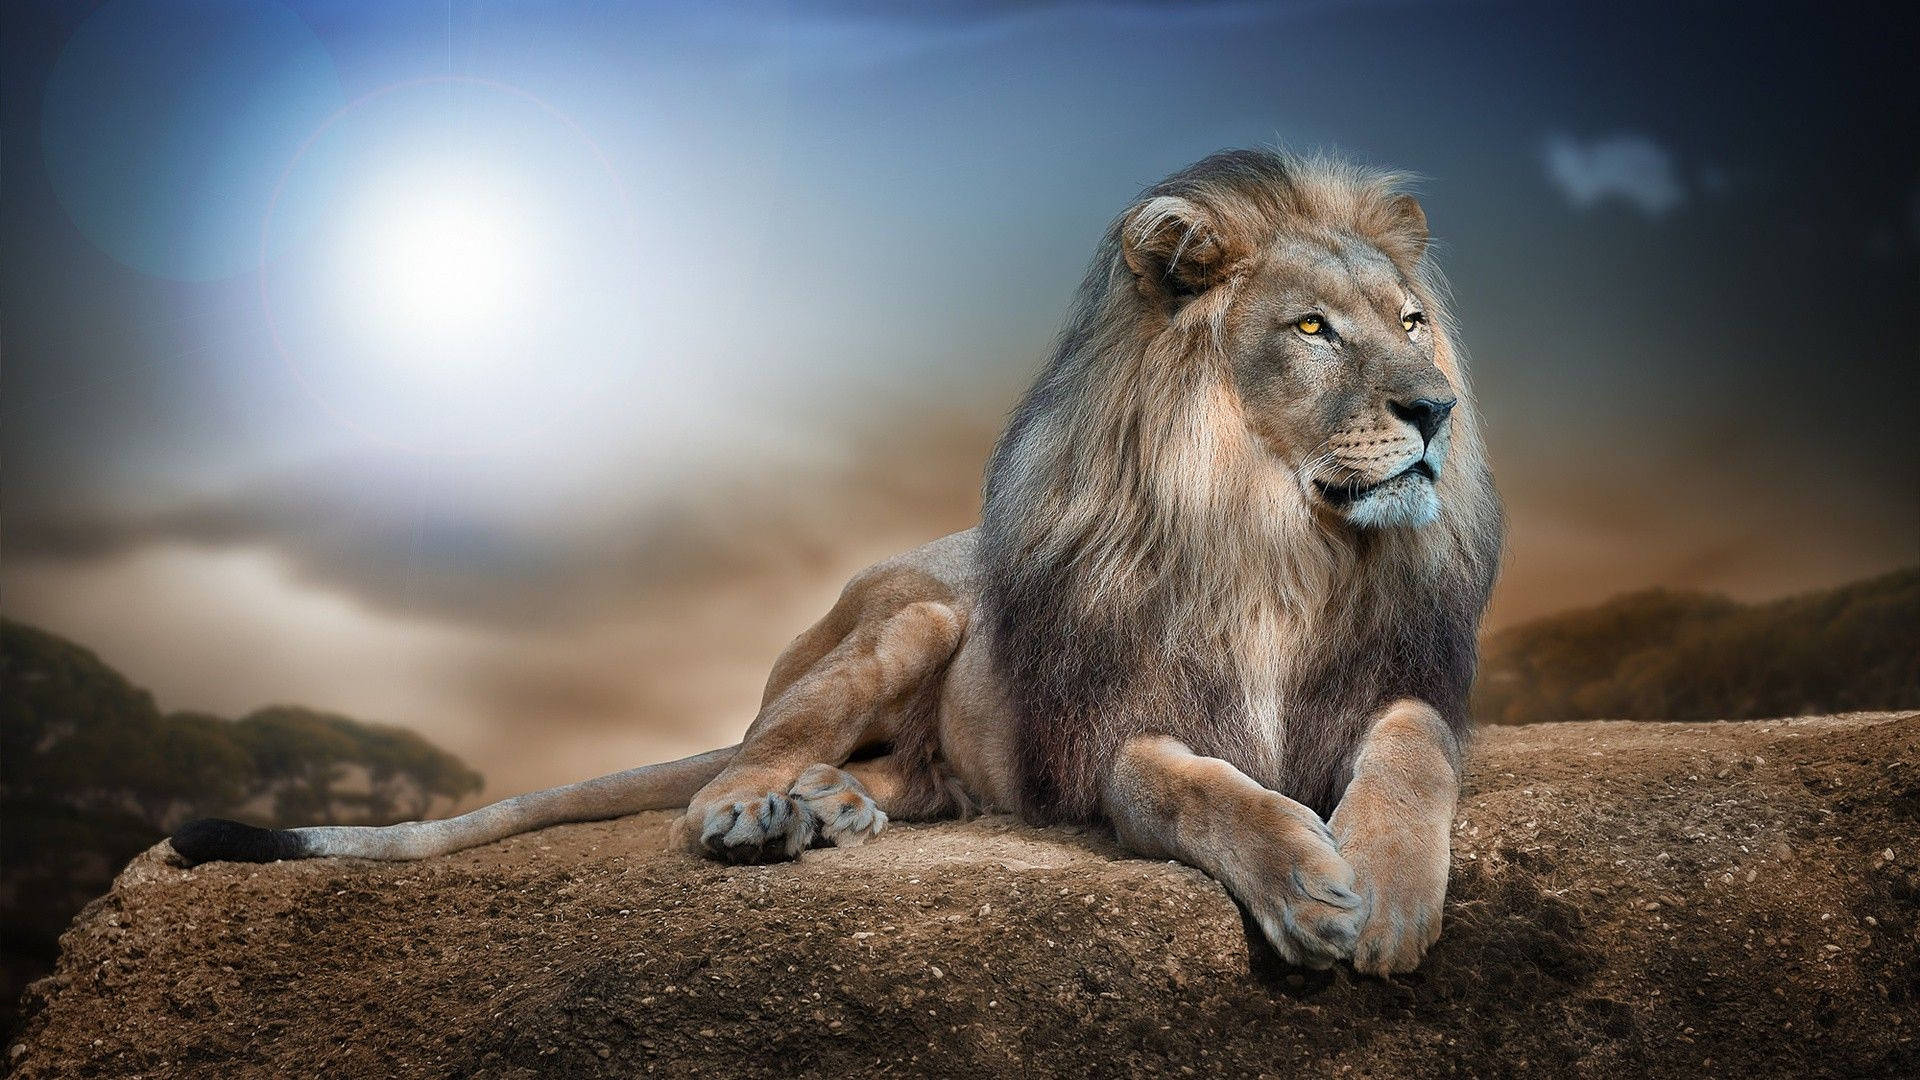 Wild Animal Lion Digital Edit